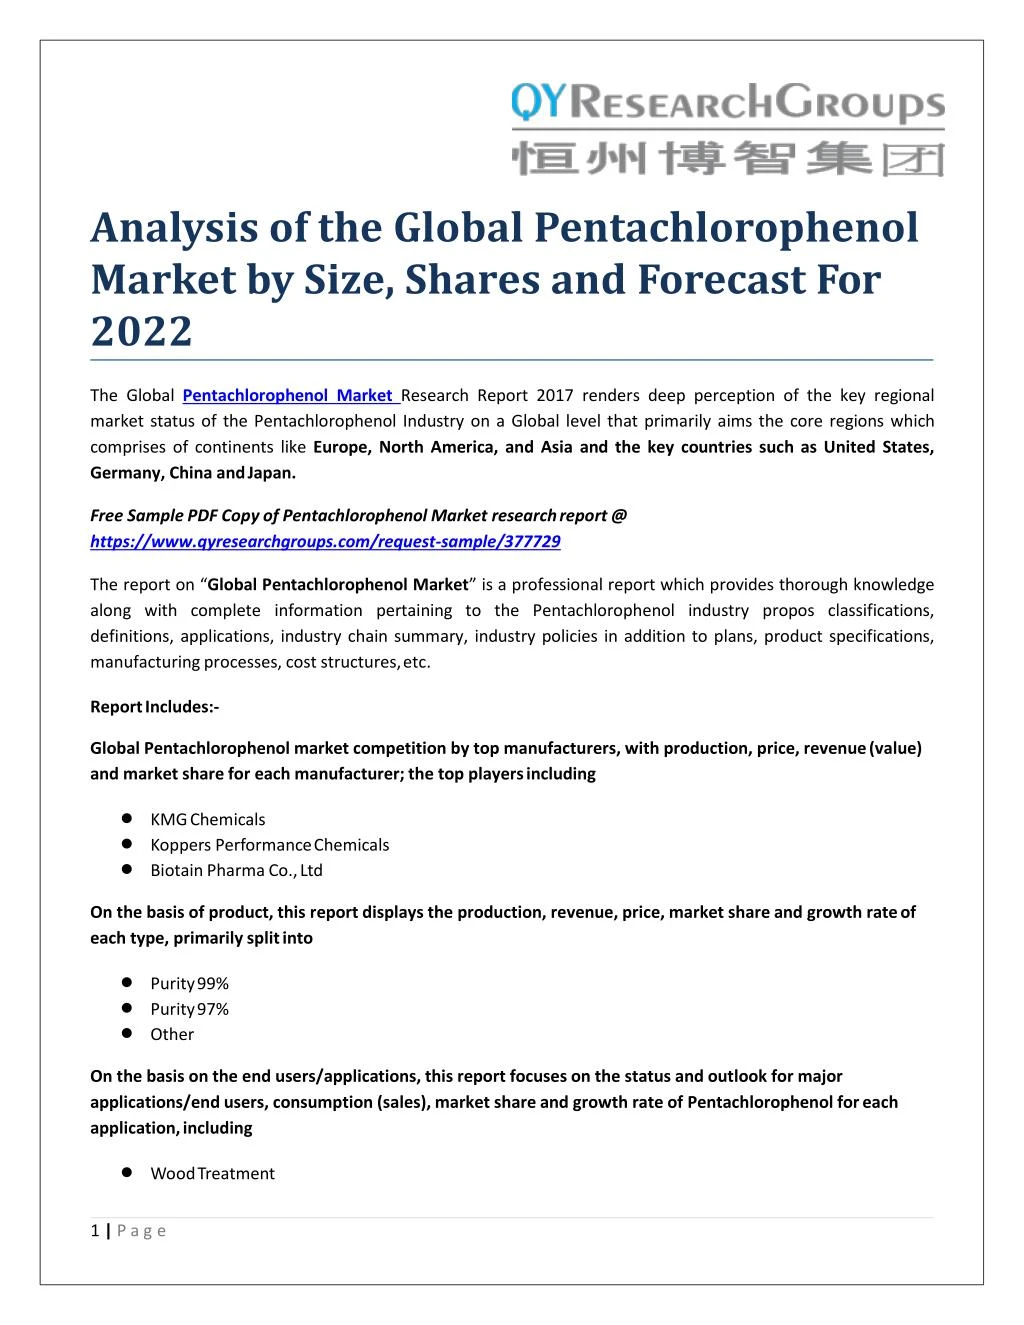 analysis of the global pentachlorophenol market